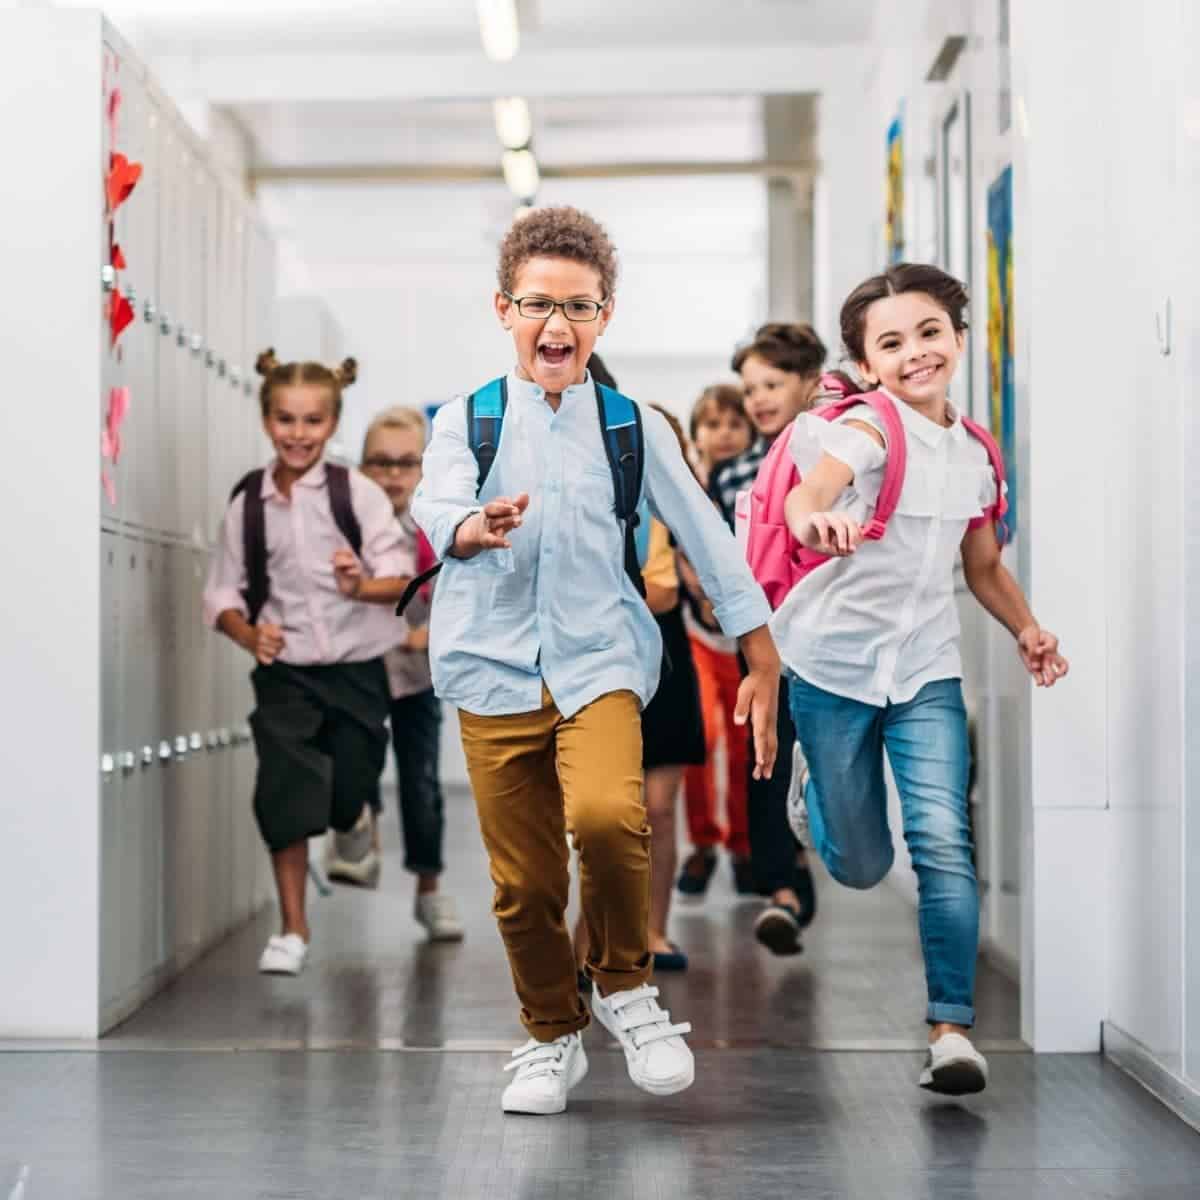 Kids running in a school hallway.